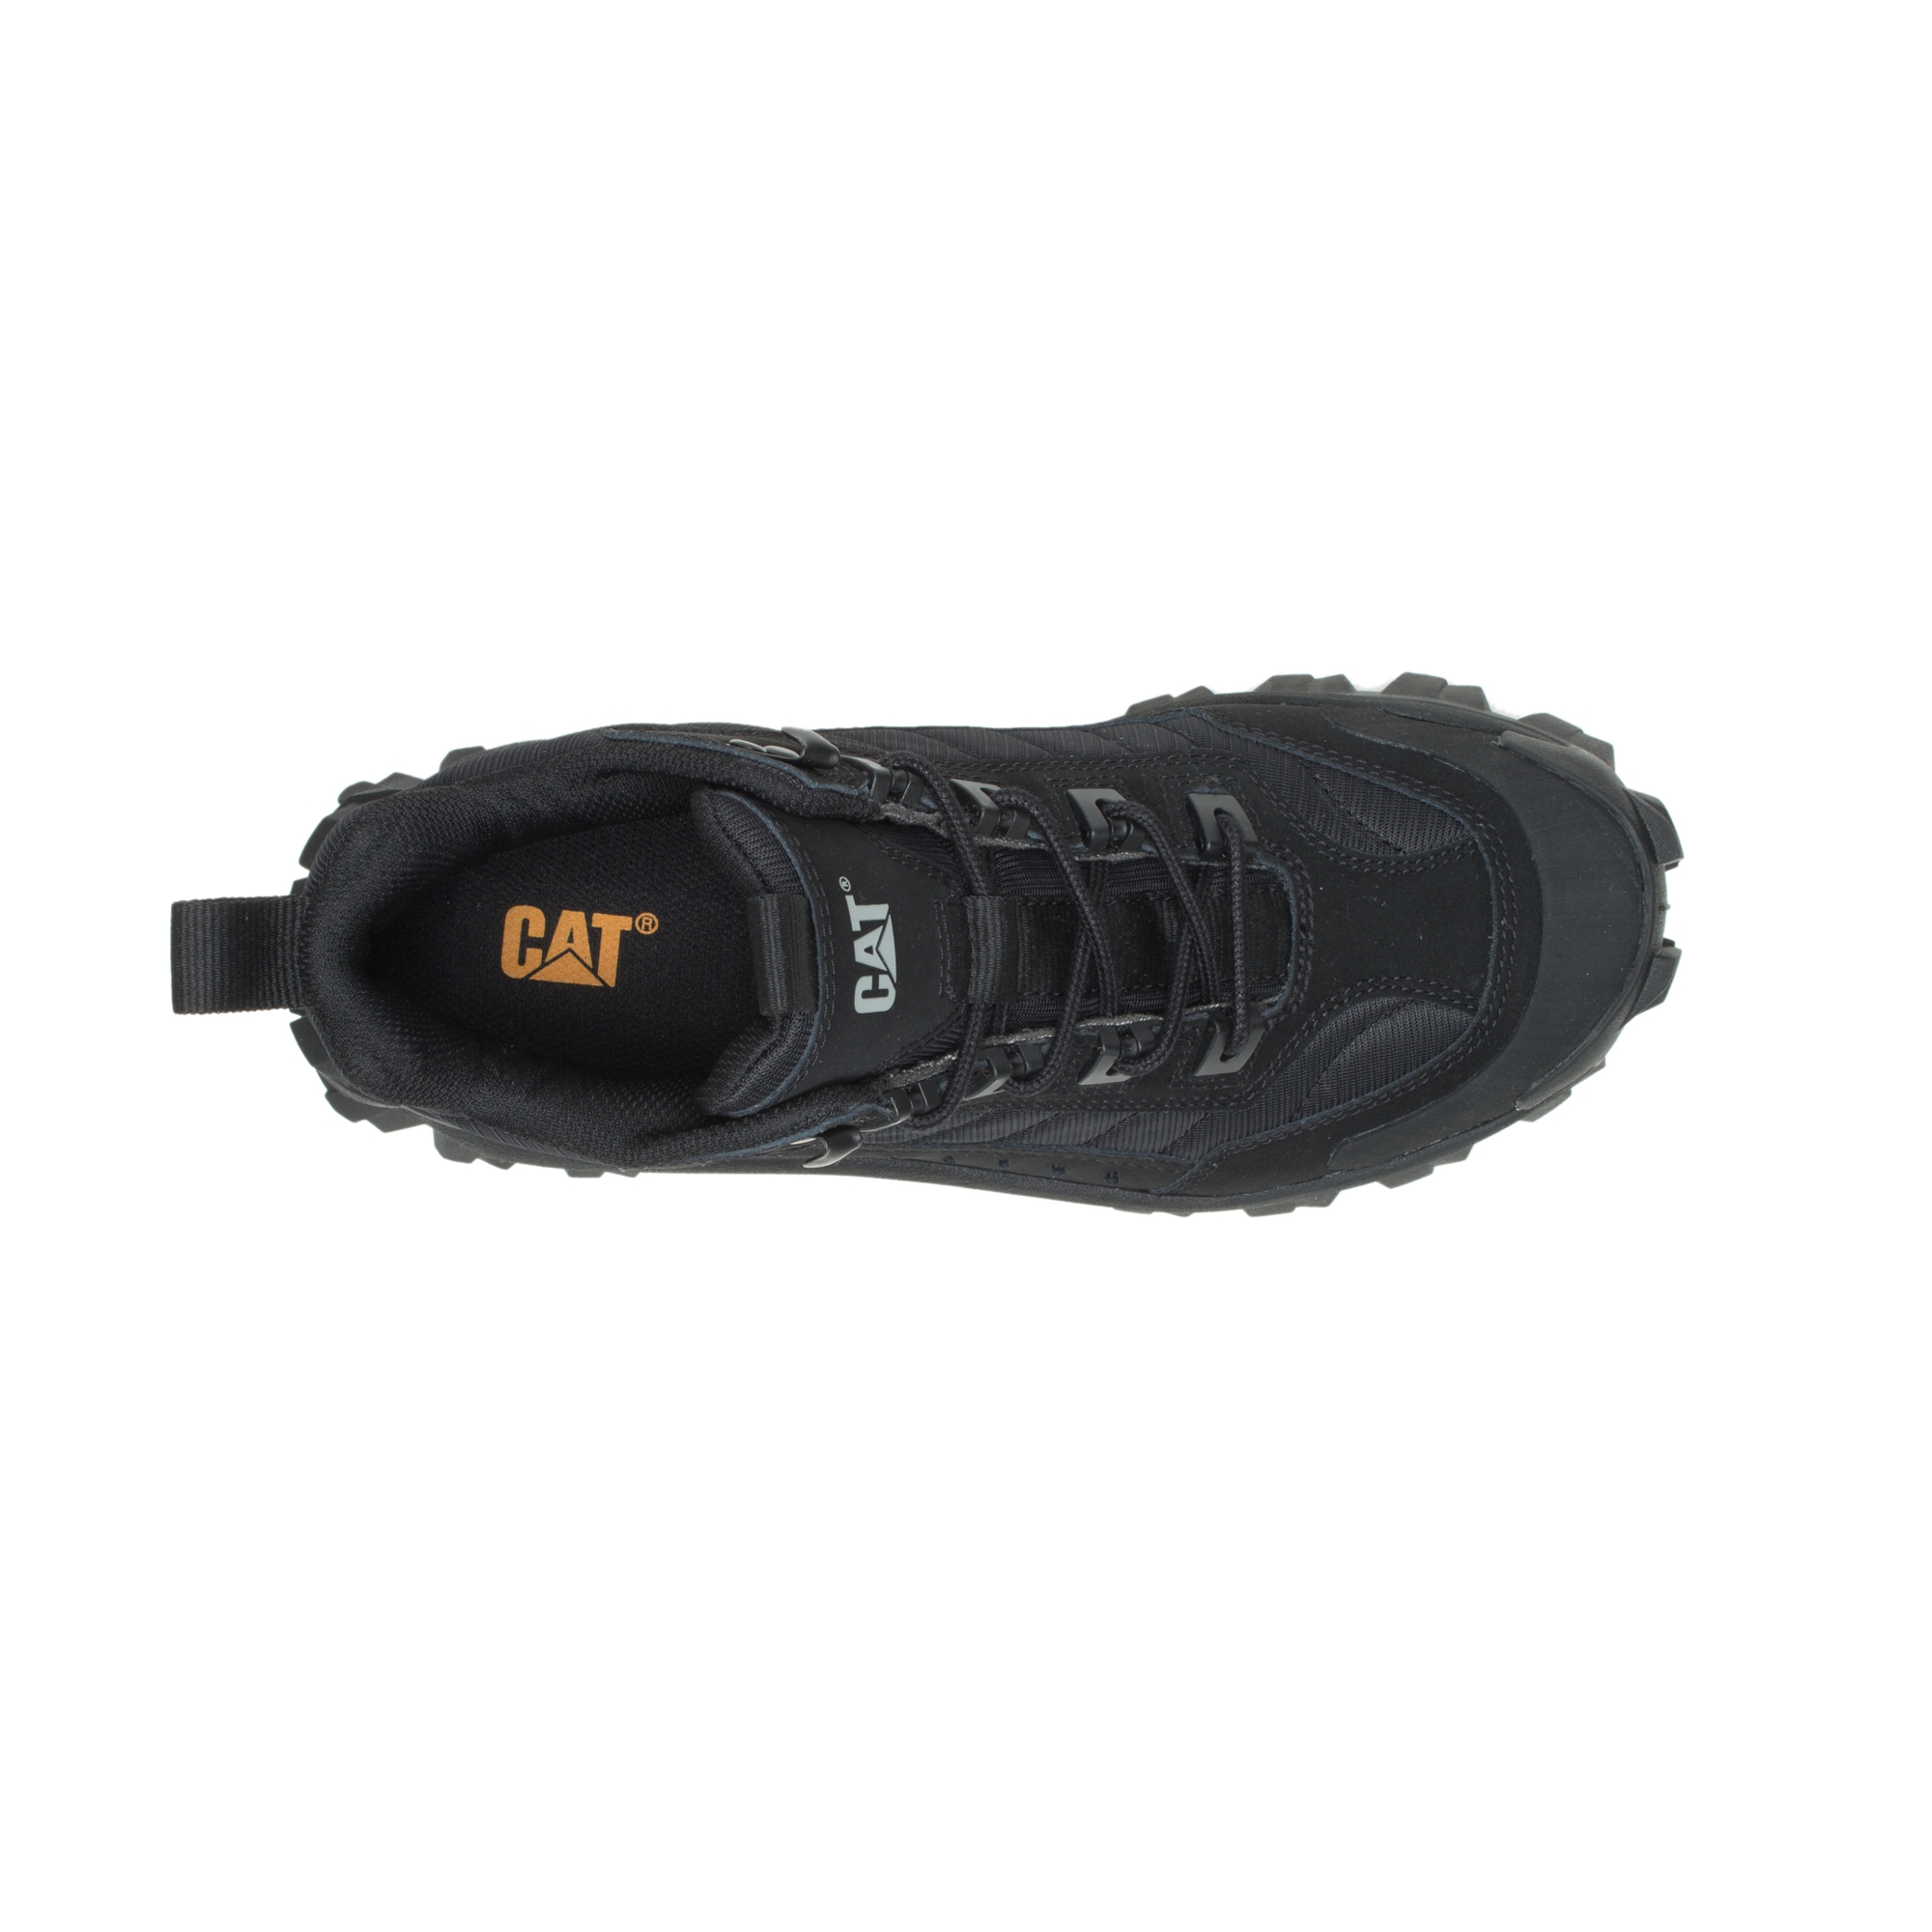 Caterpillar Intruder Mid Unisex Shoe (p110470) in Taffy 5 / W